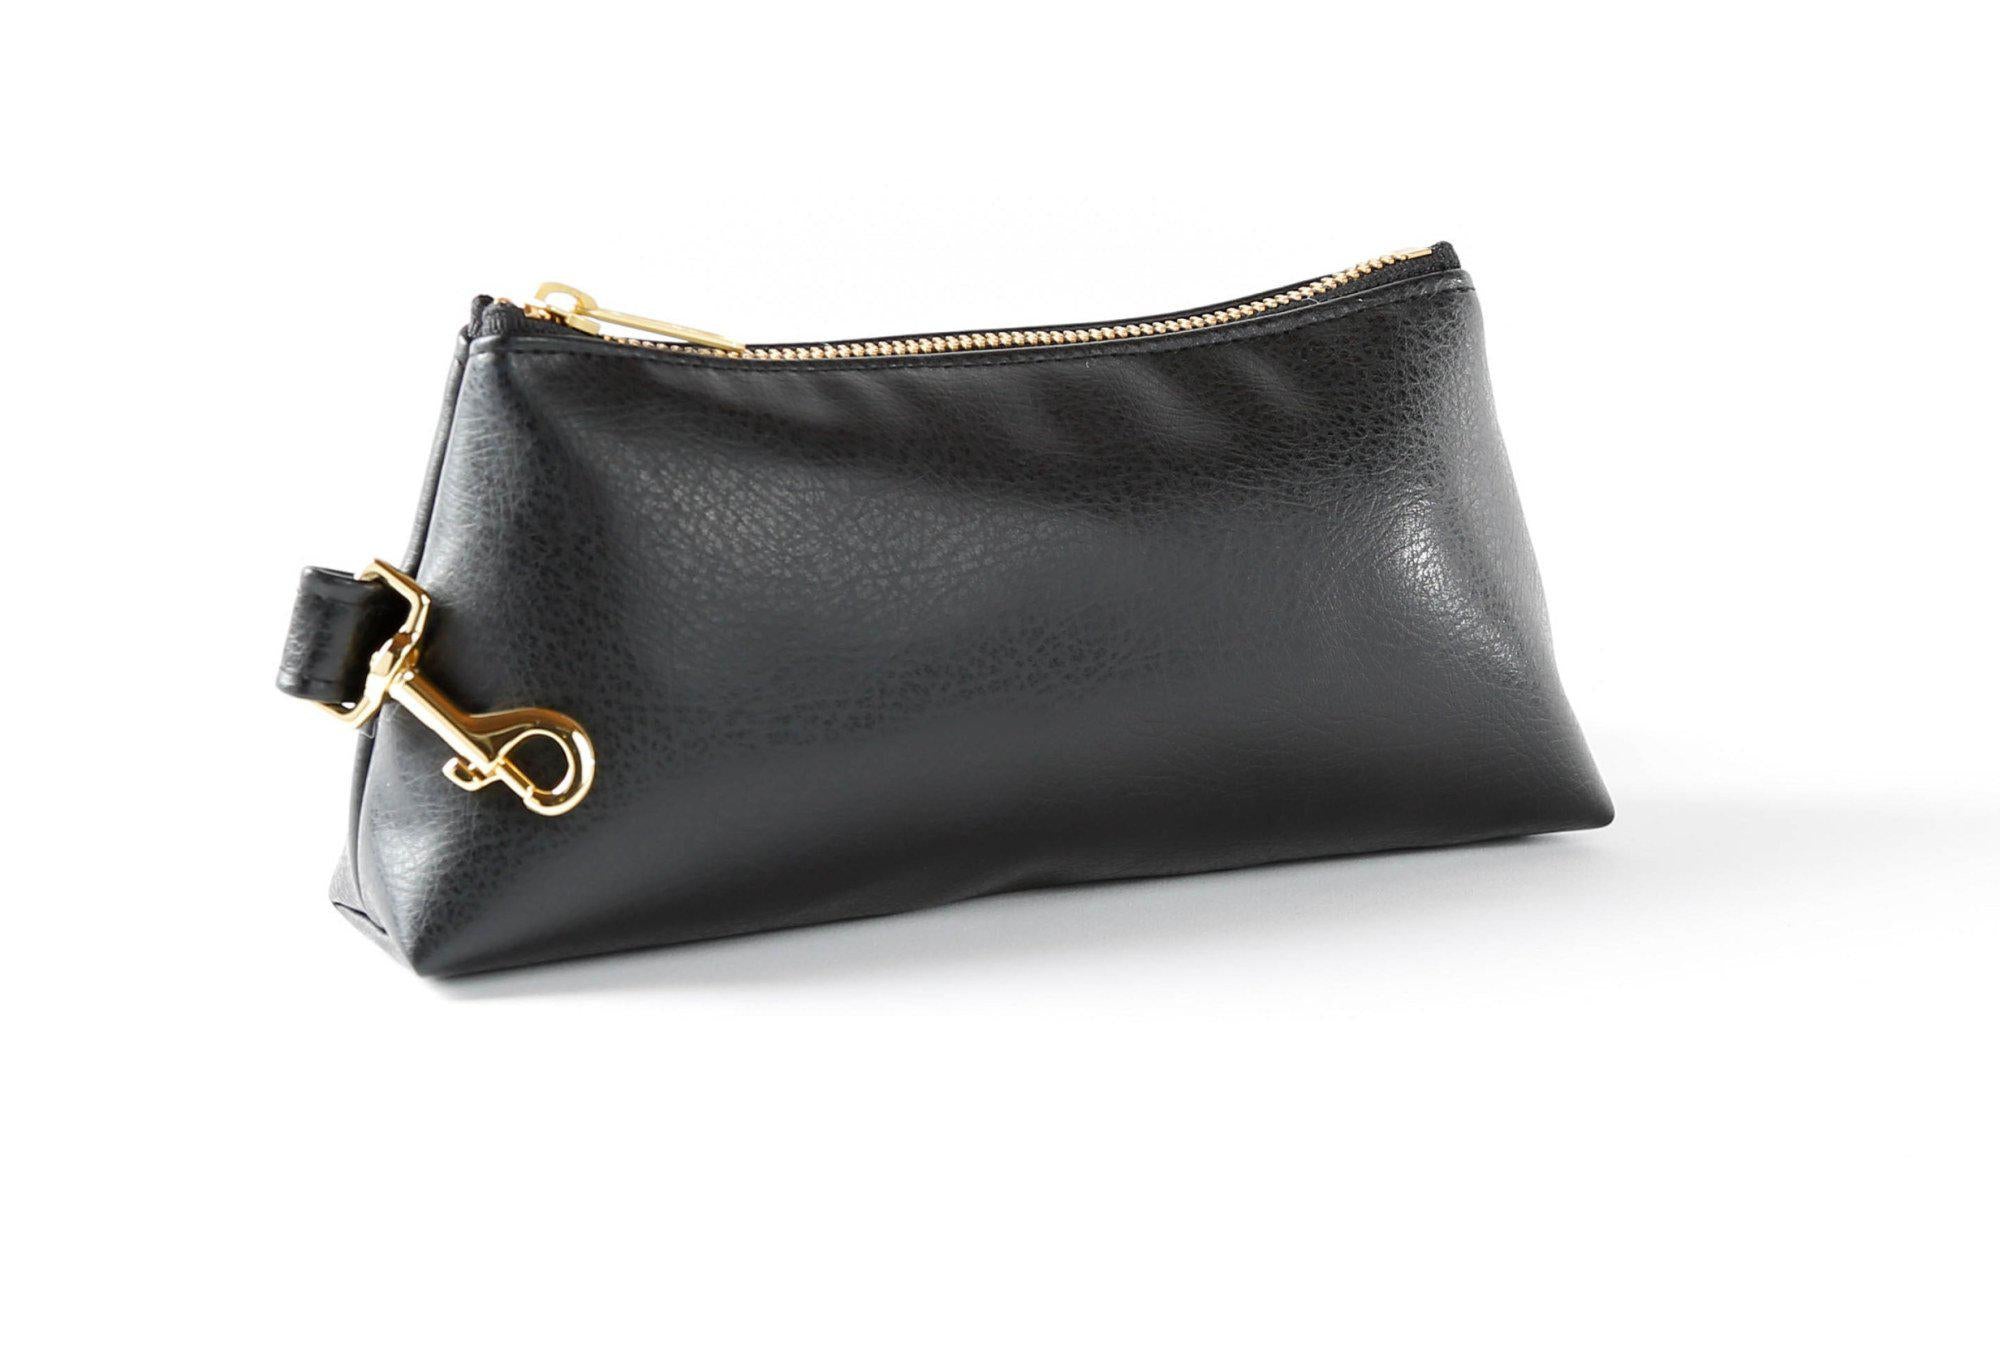 6 Pockets Pouch Hanging Handbag Organizer Clear Purse Bag Collection  Storage Holder ( Black Color ) | Handbag organization, Pocket pouch, Holder  black